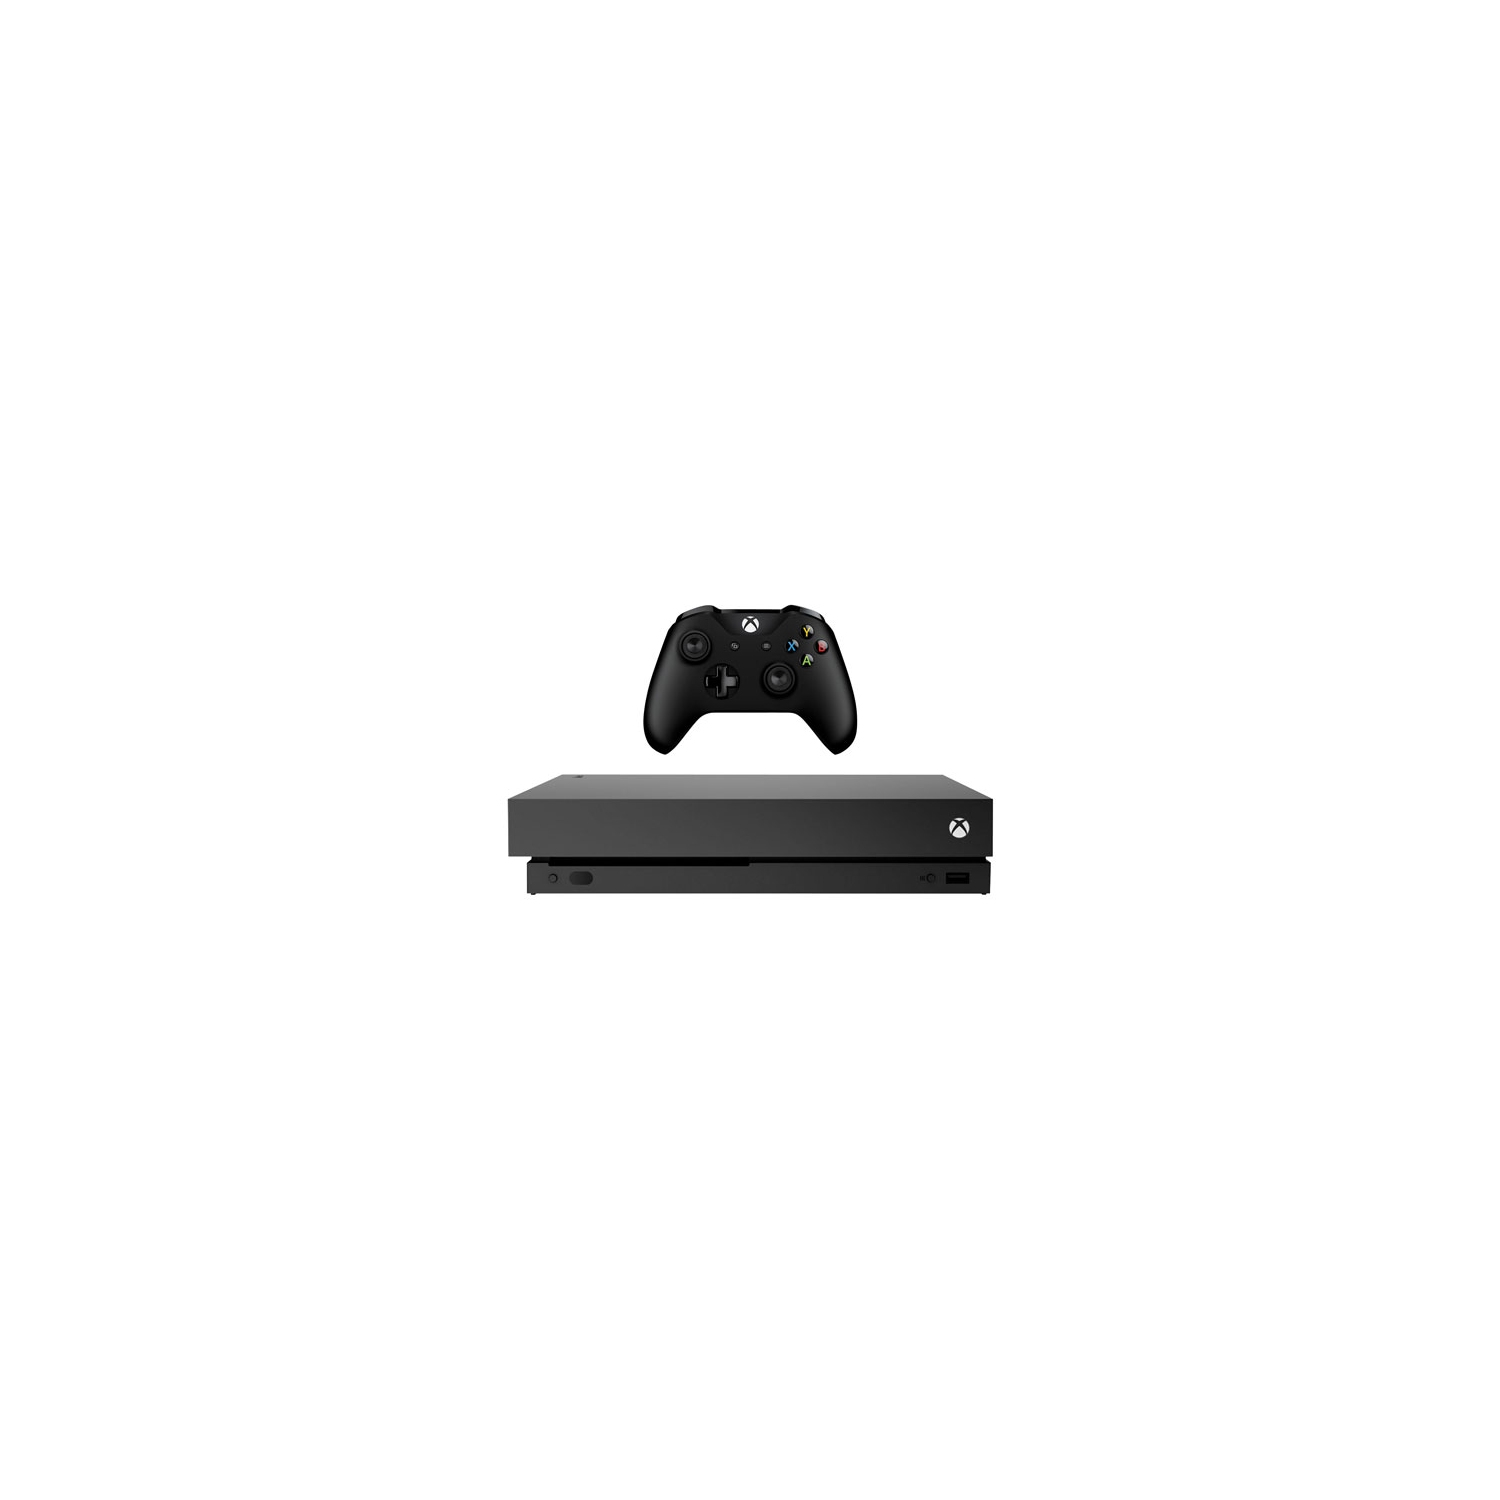 Xbox One X 1TB Console - Black - Refurbished